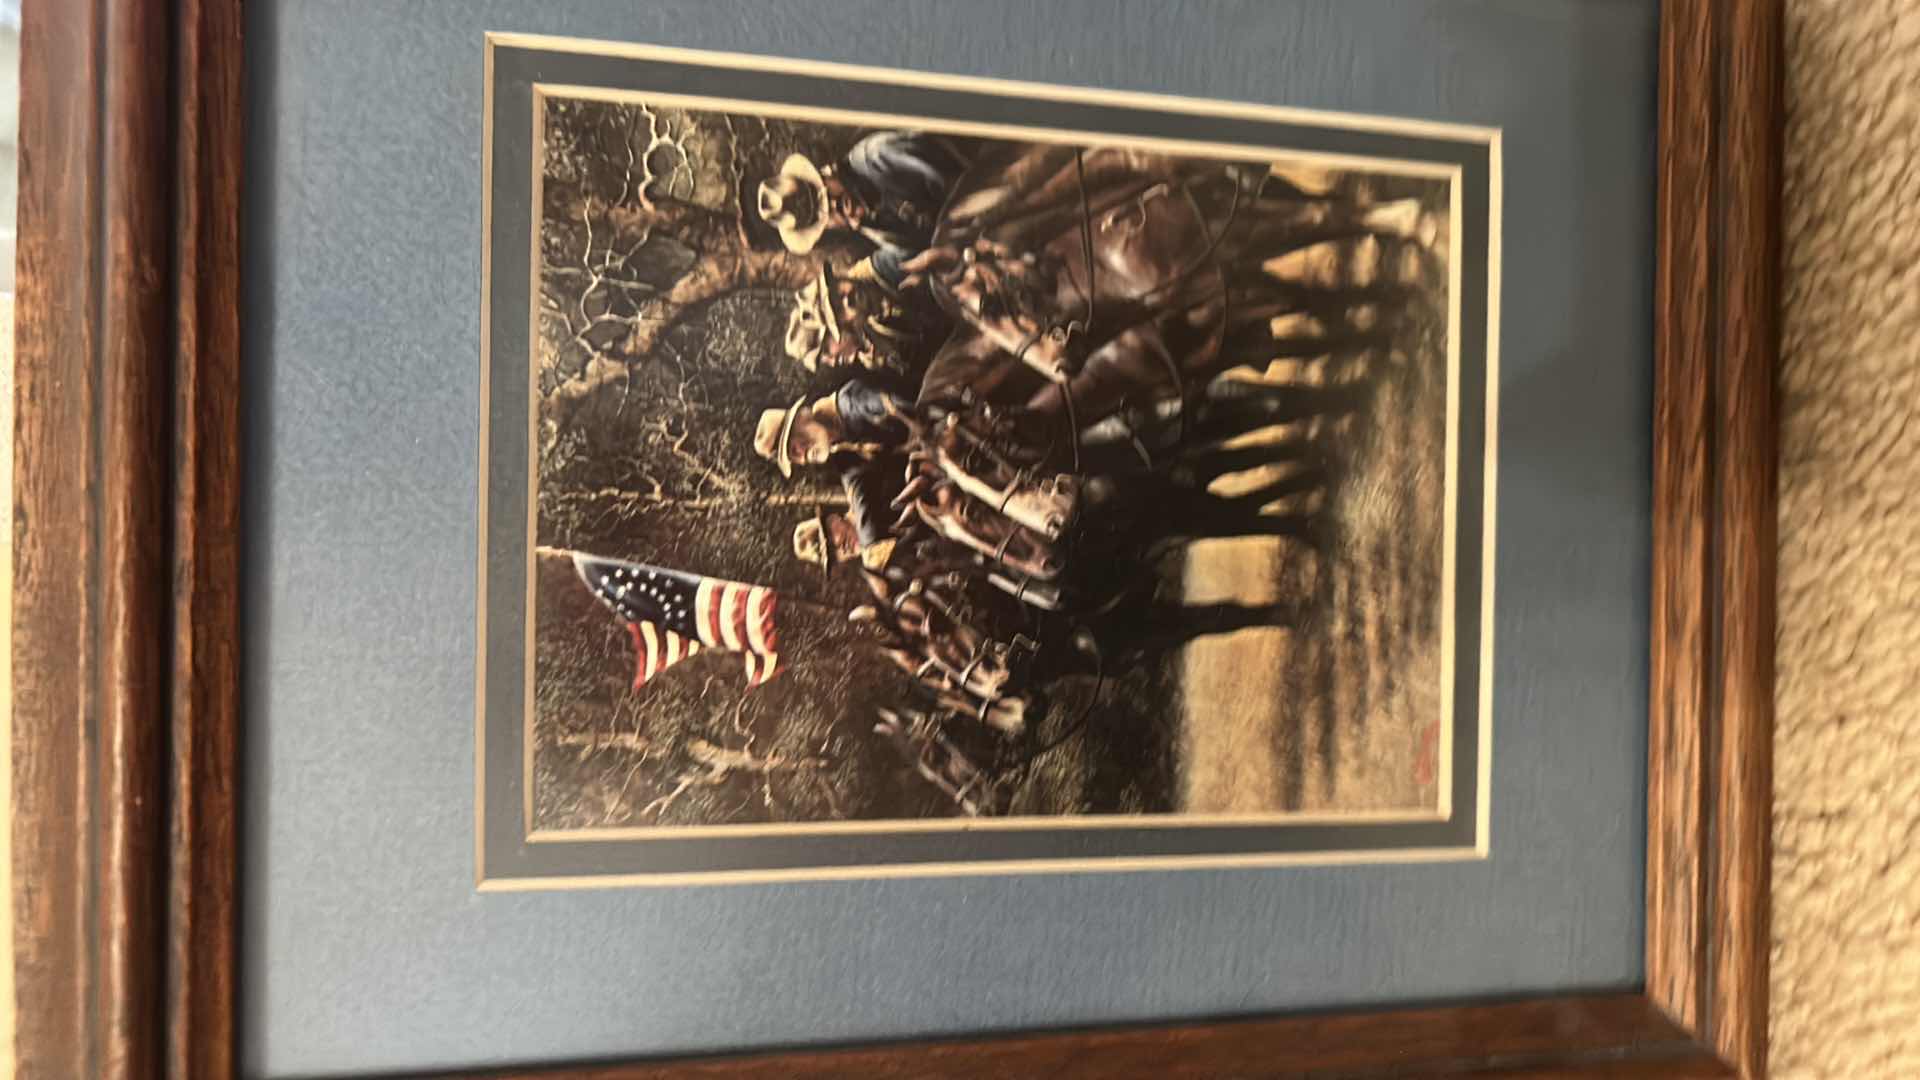 Photo 5 of 2 - 11“ x 9“ framed artwork, "Return of the Warriors" 1980 & "Waiting for the captain" 1980